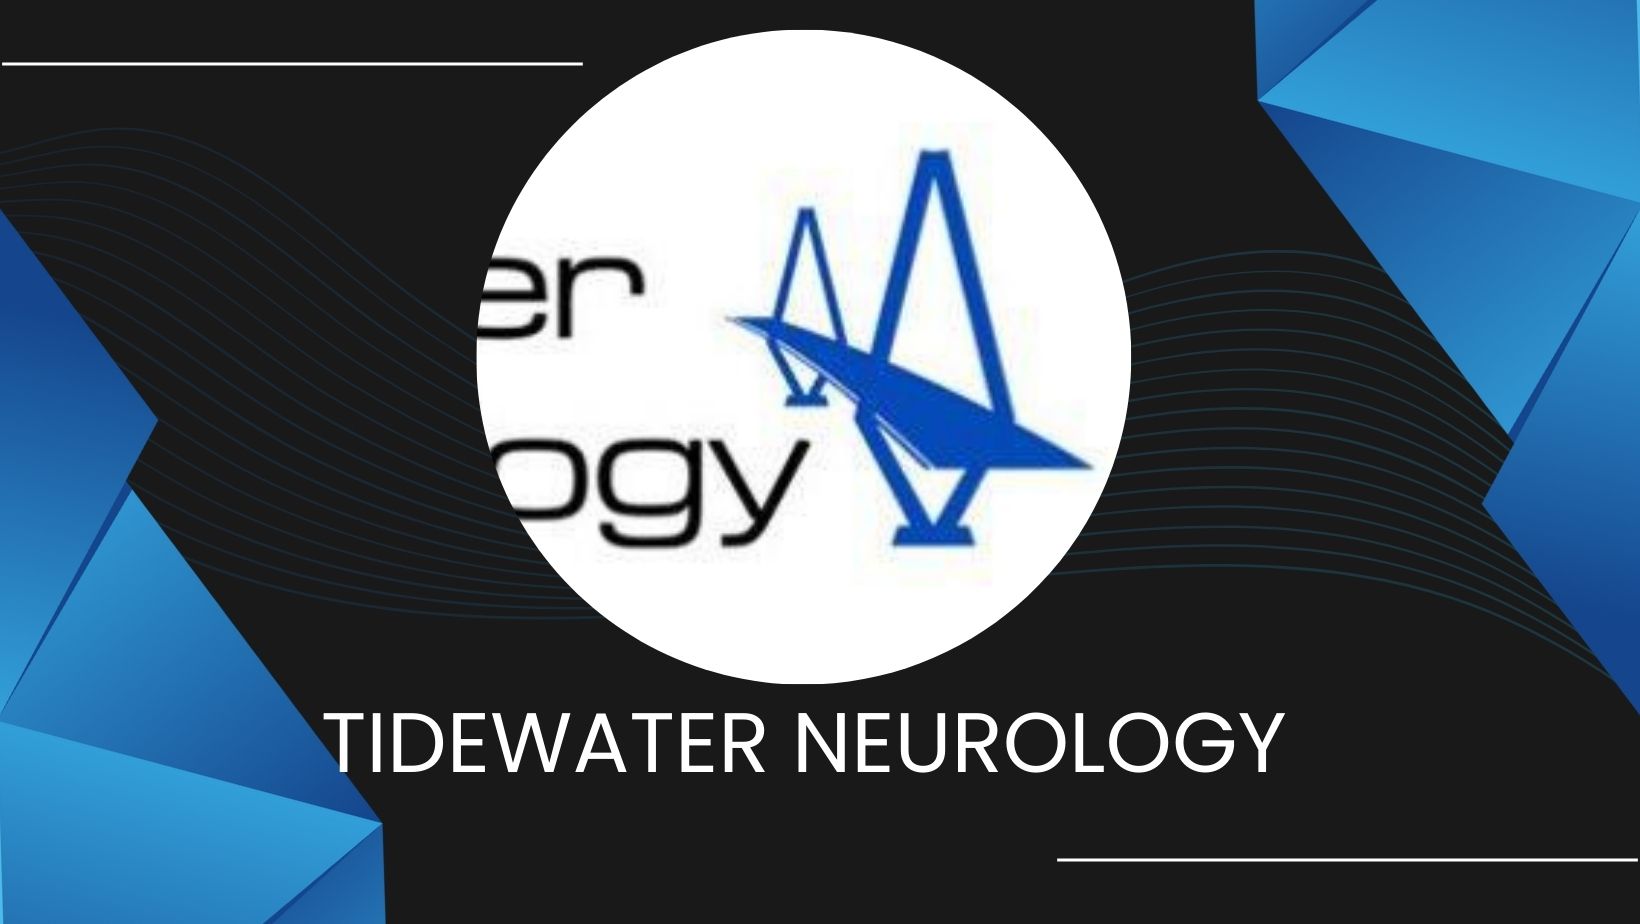 Tidewater Neurology